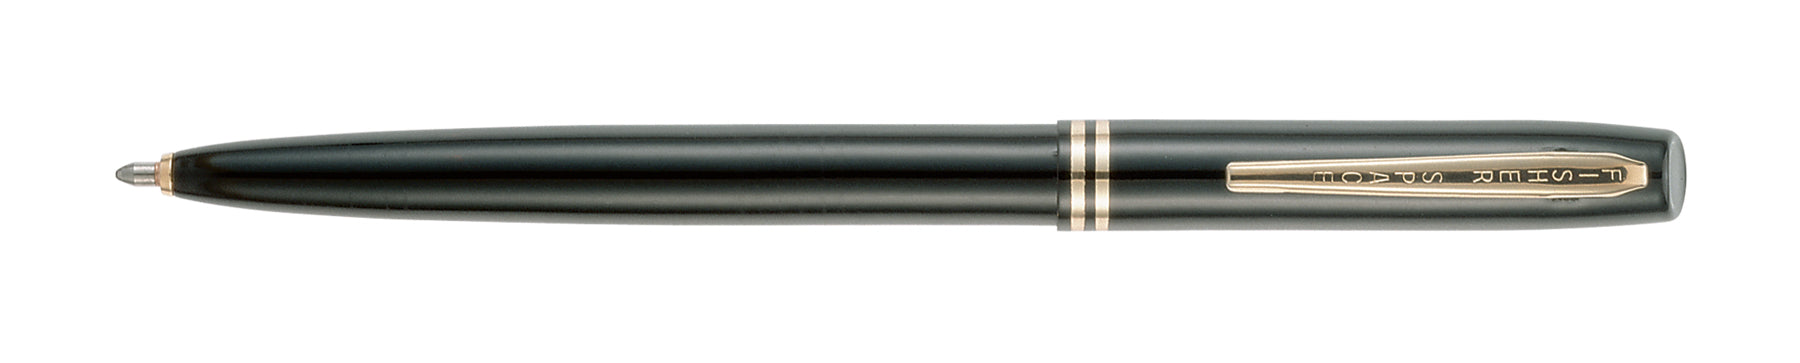 Fisher Space Pen - Shiny Black Cap-O-Matic